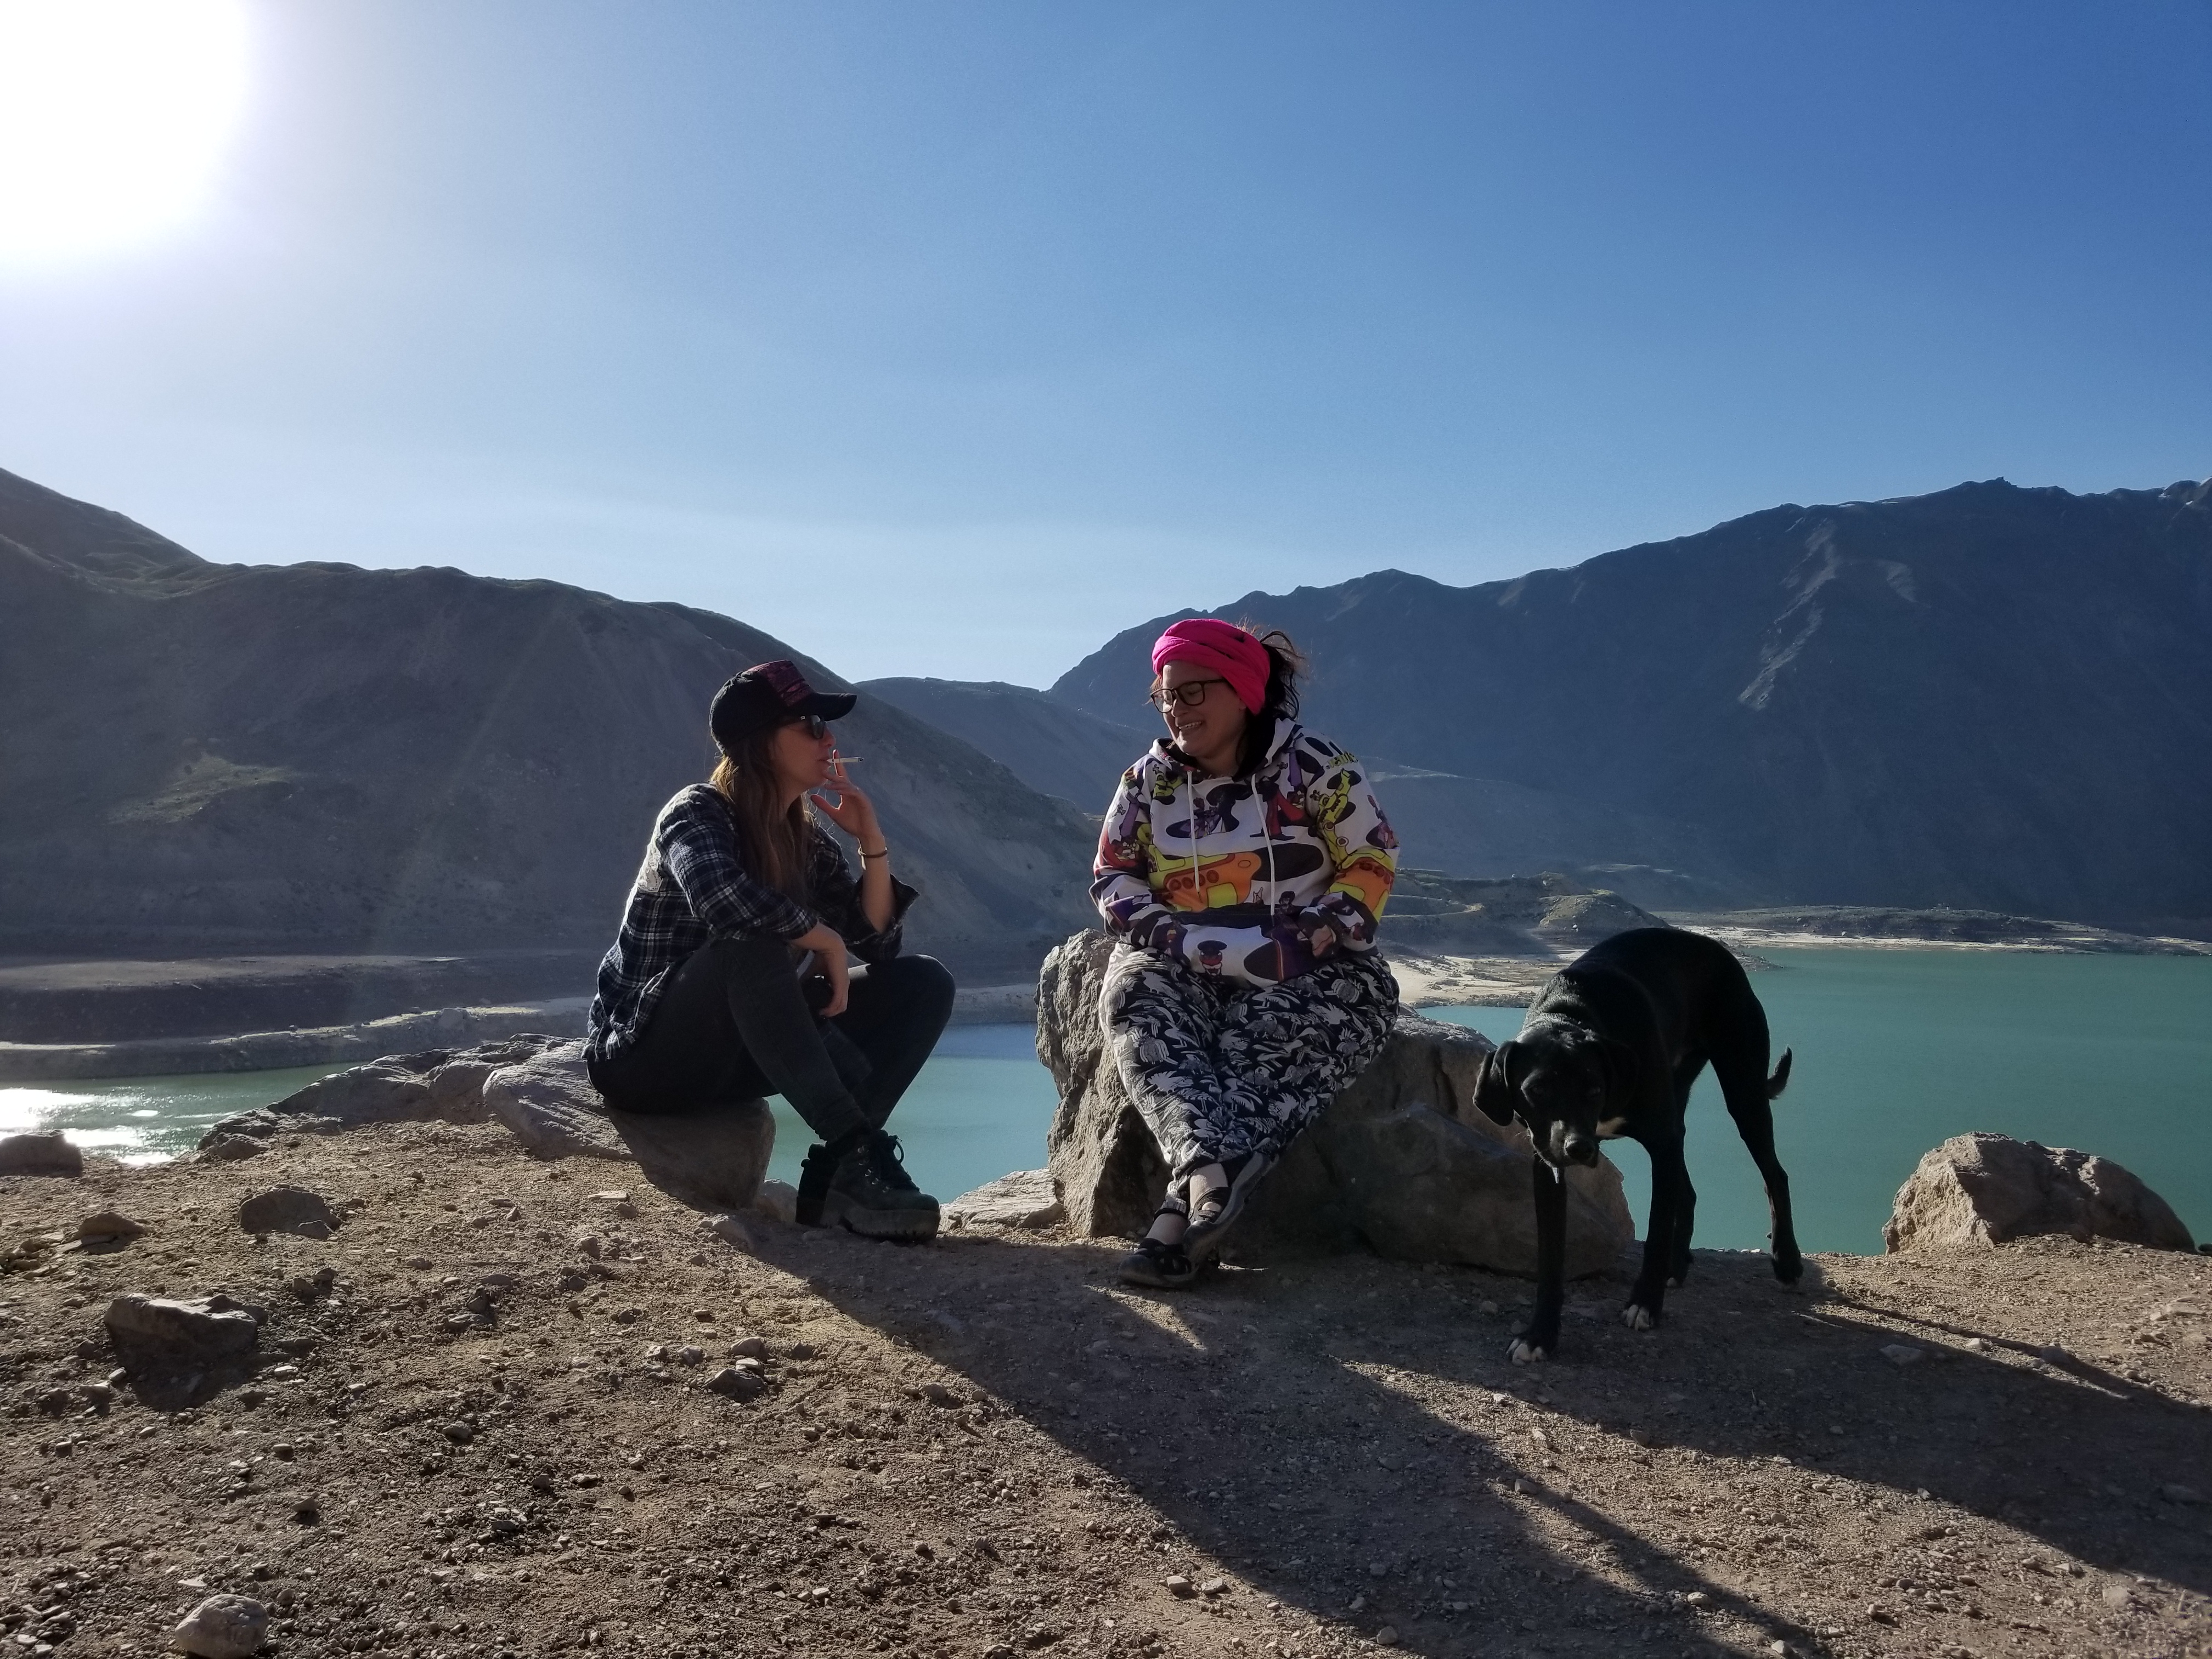 Sitting near the El Yeso Dam in Chile.